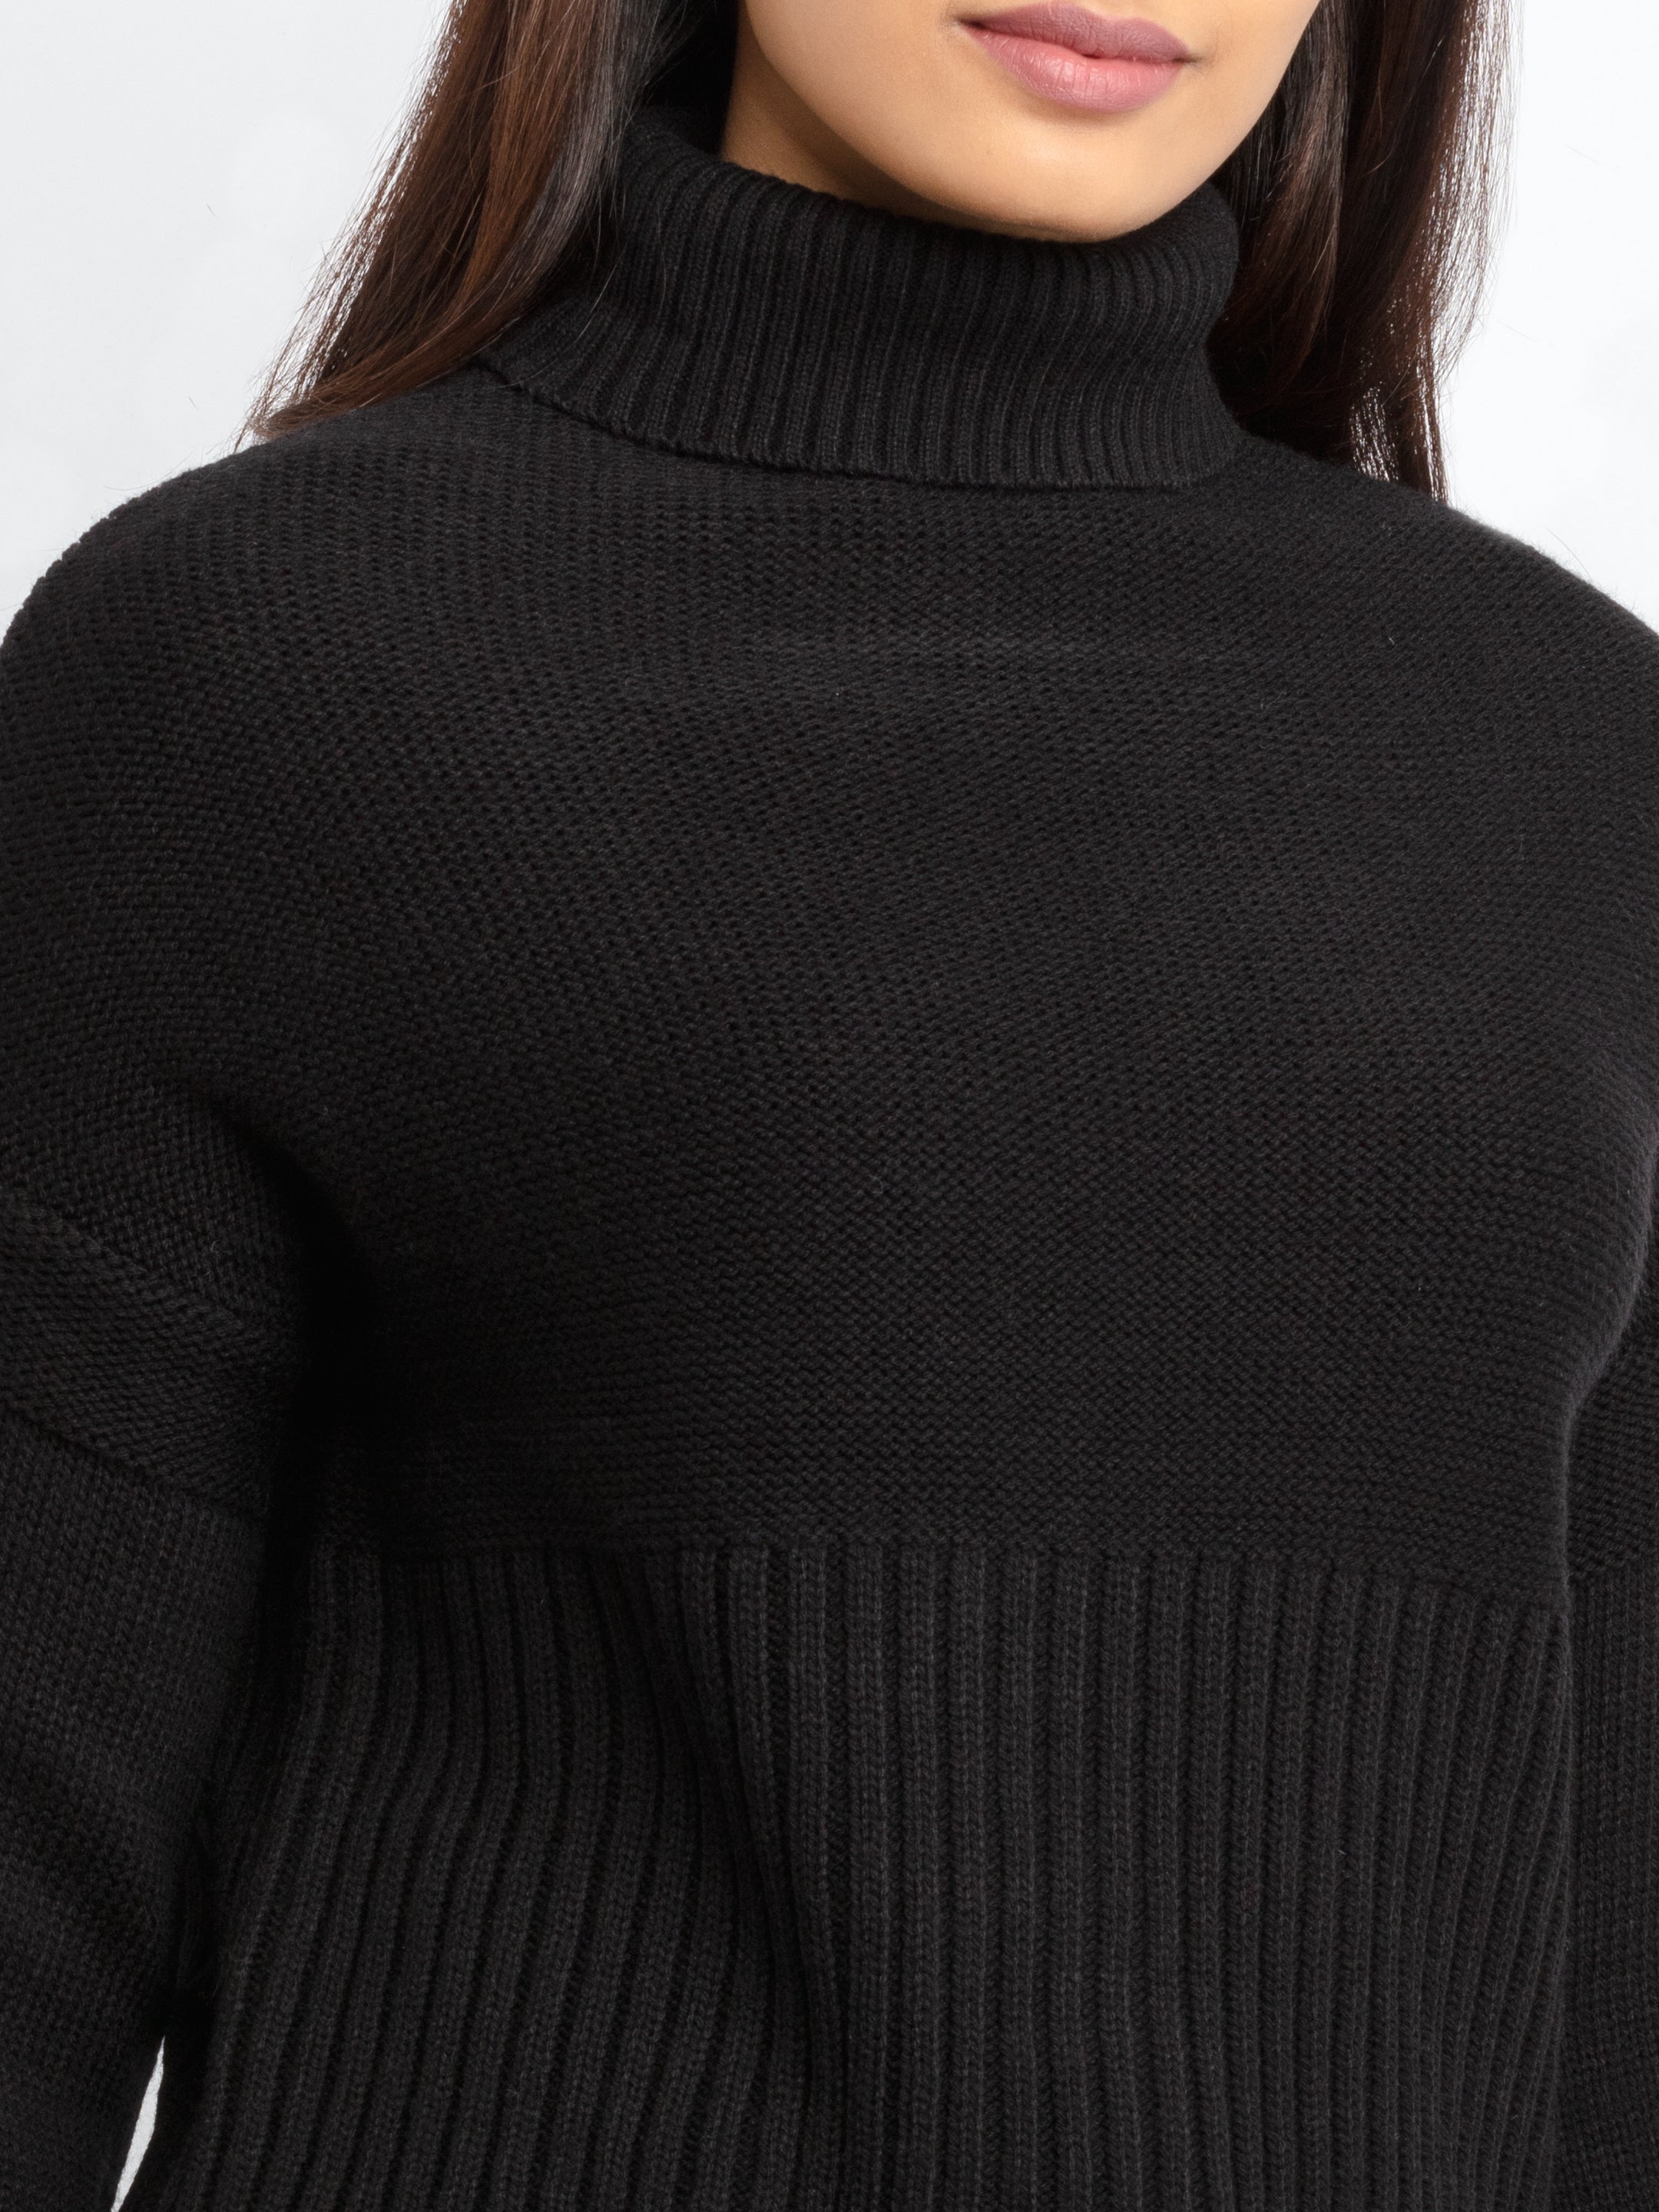 Buy Black Turtleneck Sweater for Women